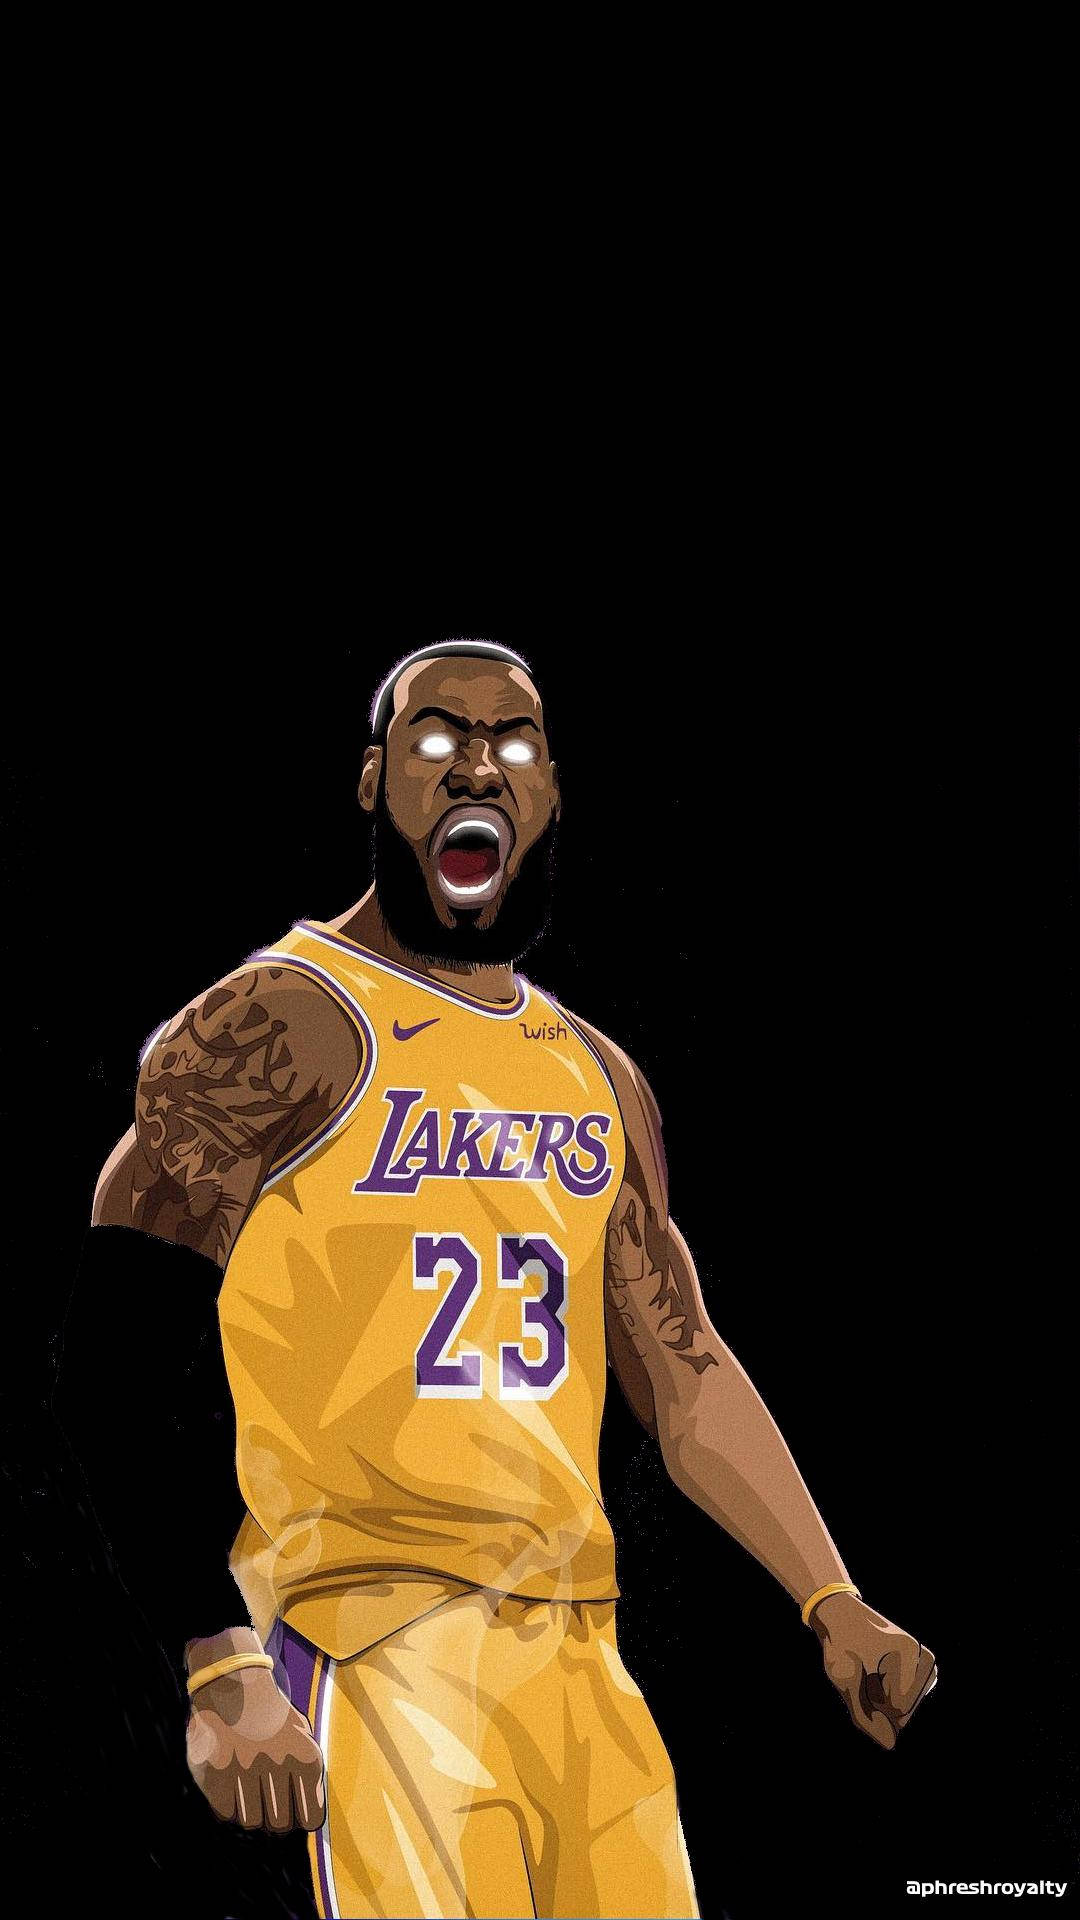 Låsupp Din Lakers-anda Med Denna Unika Iphone-design. Wallpaper